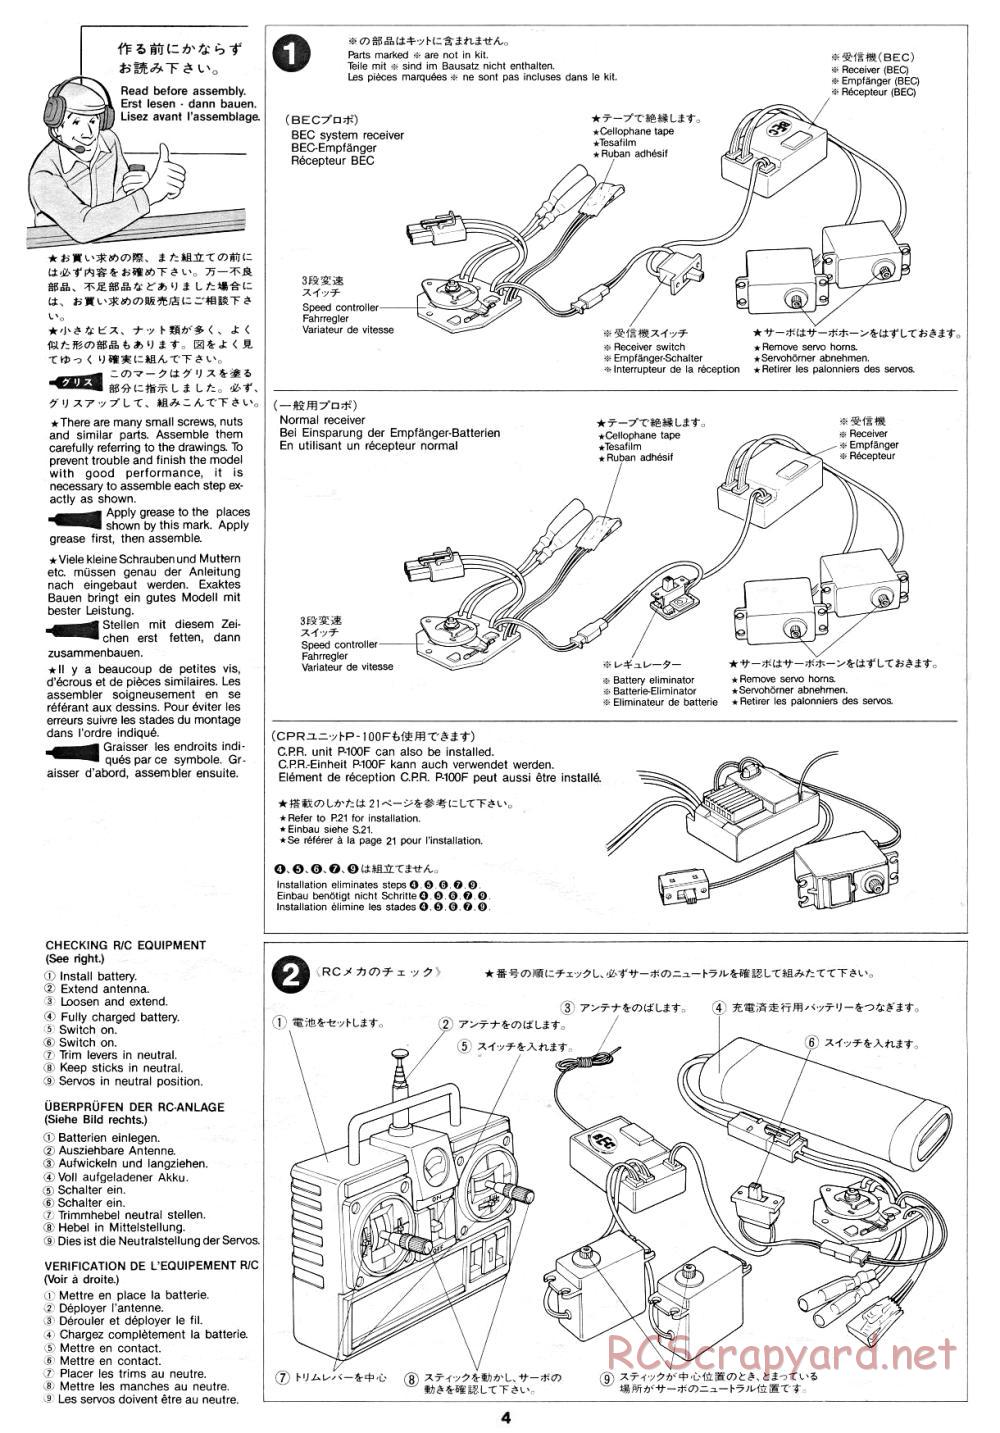 Tamiya - Fire Dragon - 58078 - Manual - Page 4